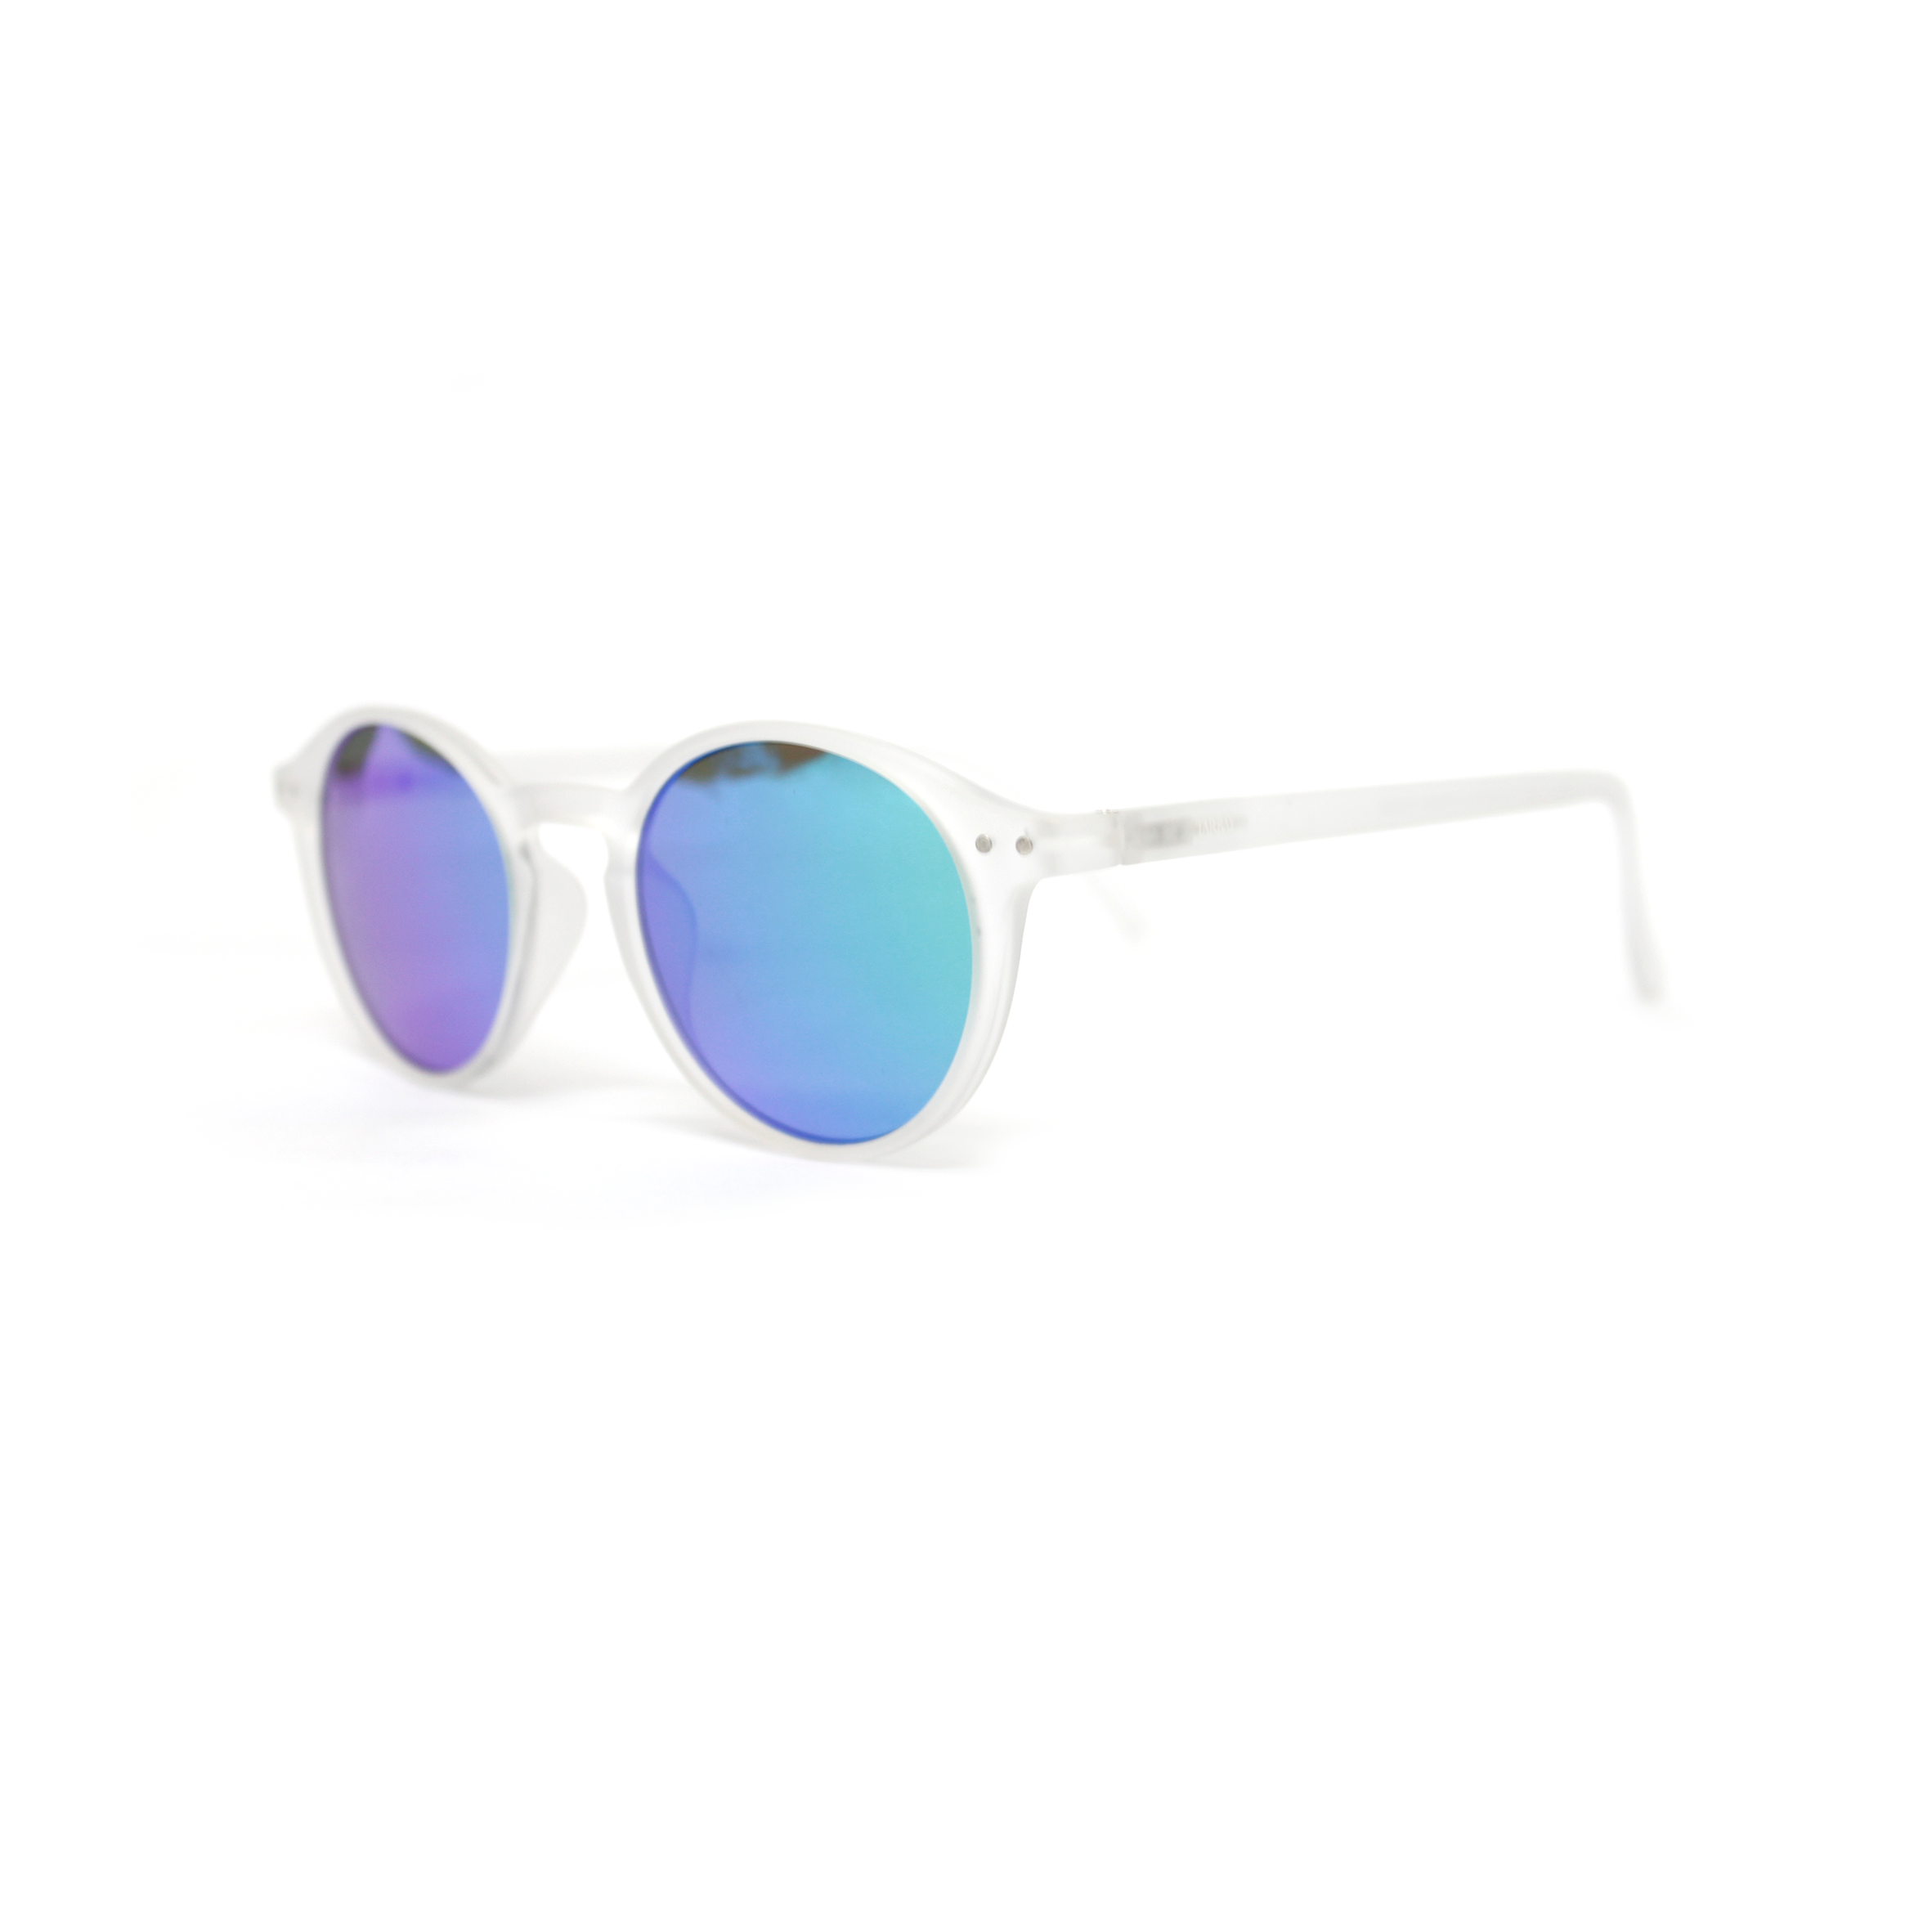 Parasol #2 - Ice Green SunGlasses TARBAY   